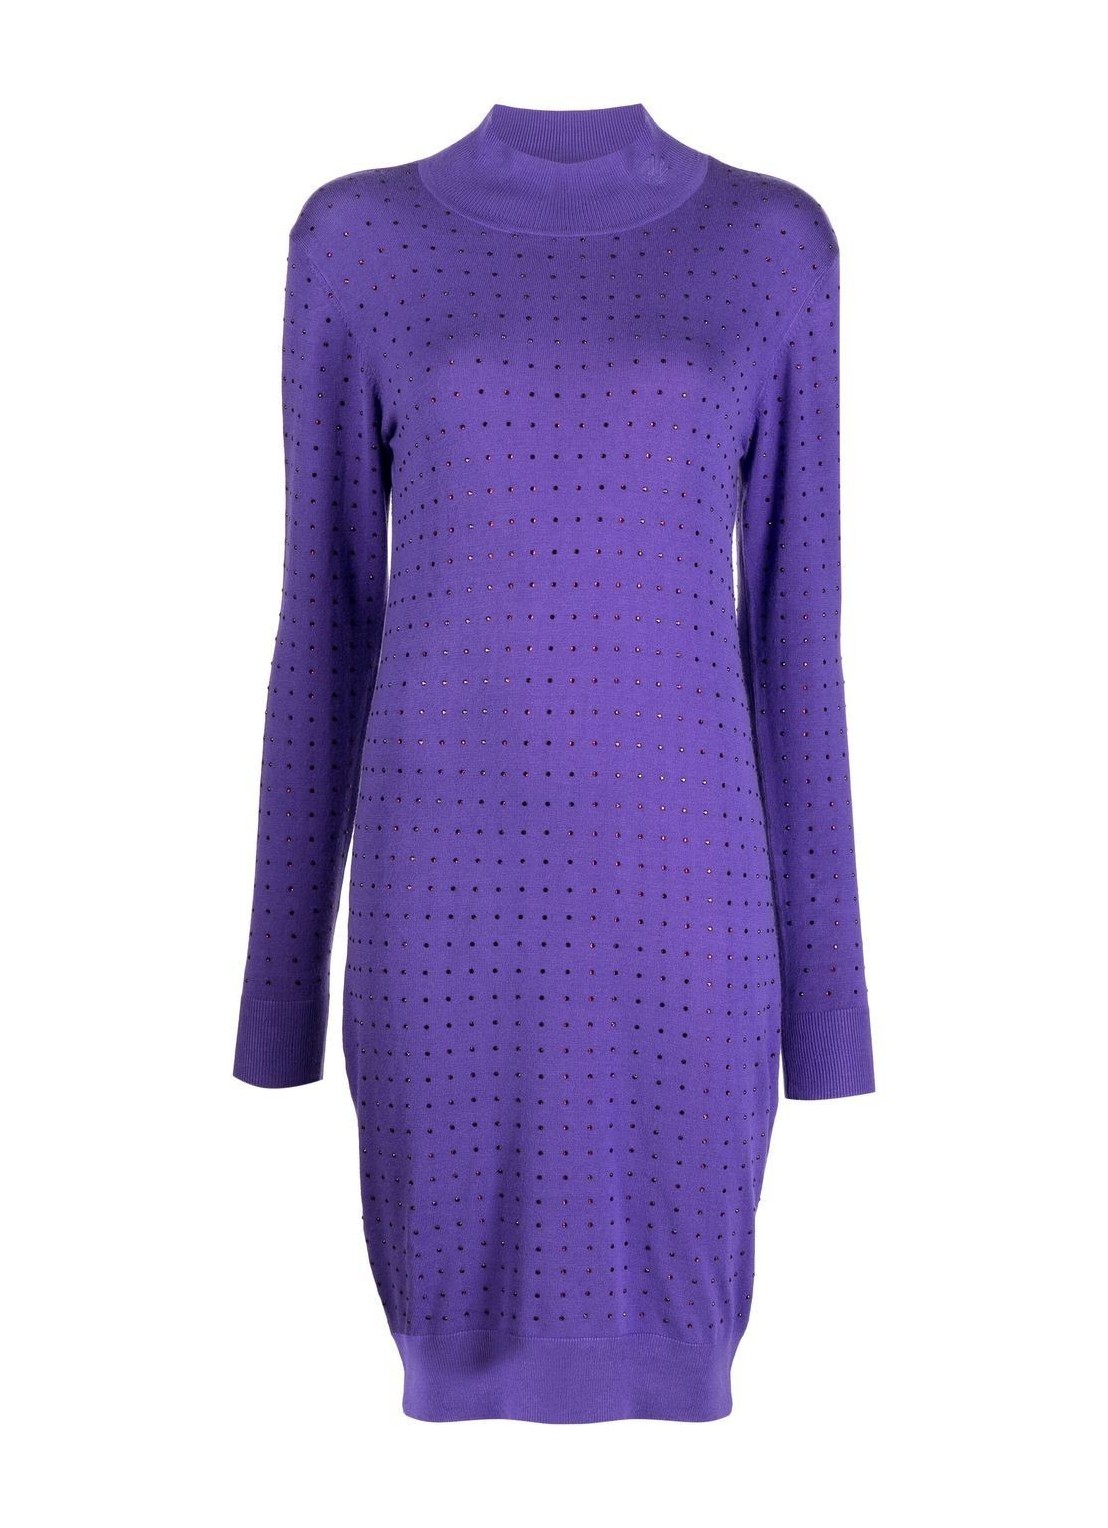 Vestido karl lagerfeld dress woman open back rhinestone knitdress 230w1358 371 talla violeta
 